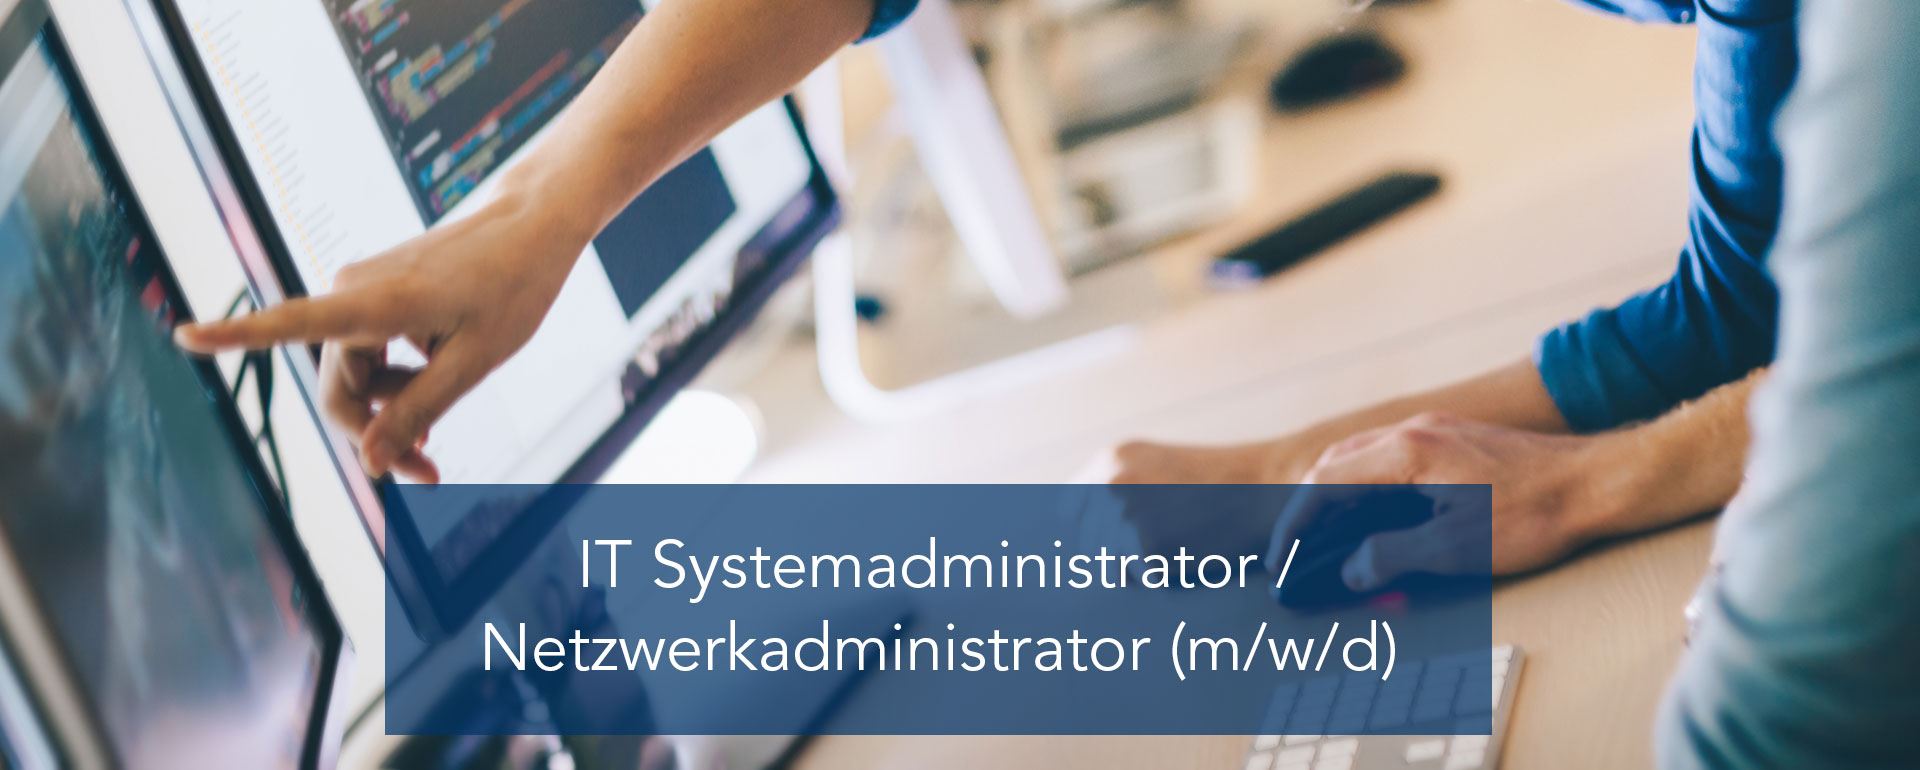 IT Systemadministrator / Netzwerkadministrator (m/w/d)